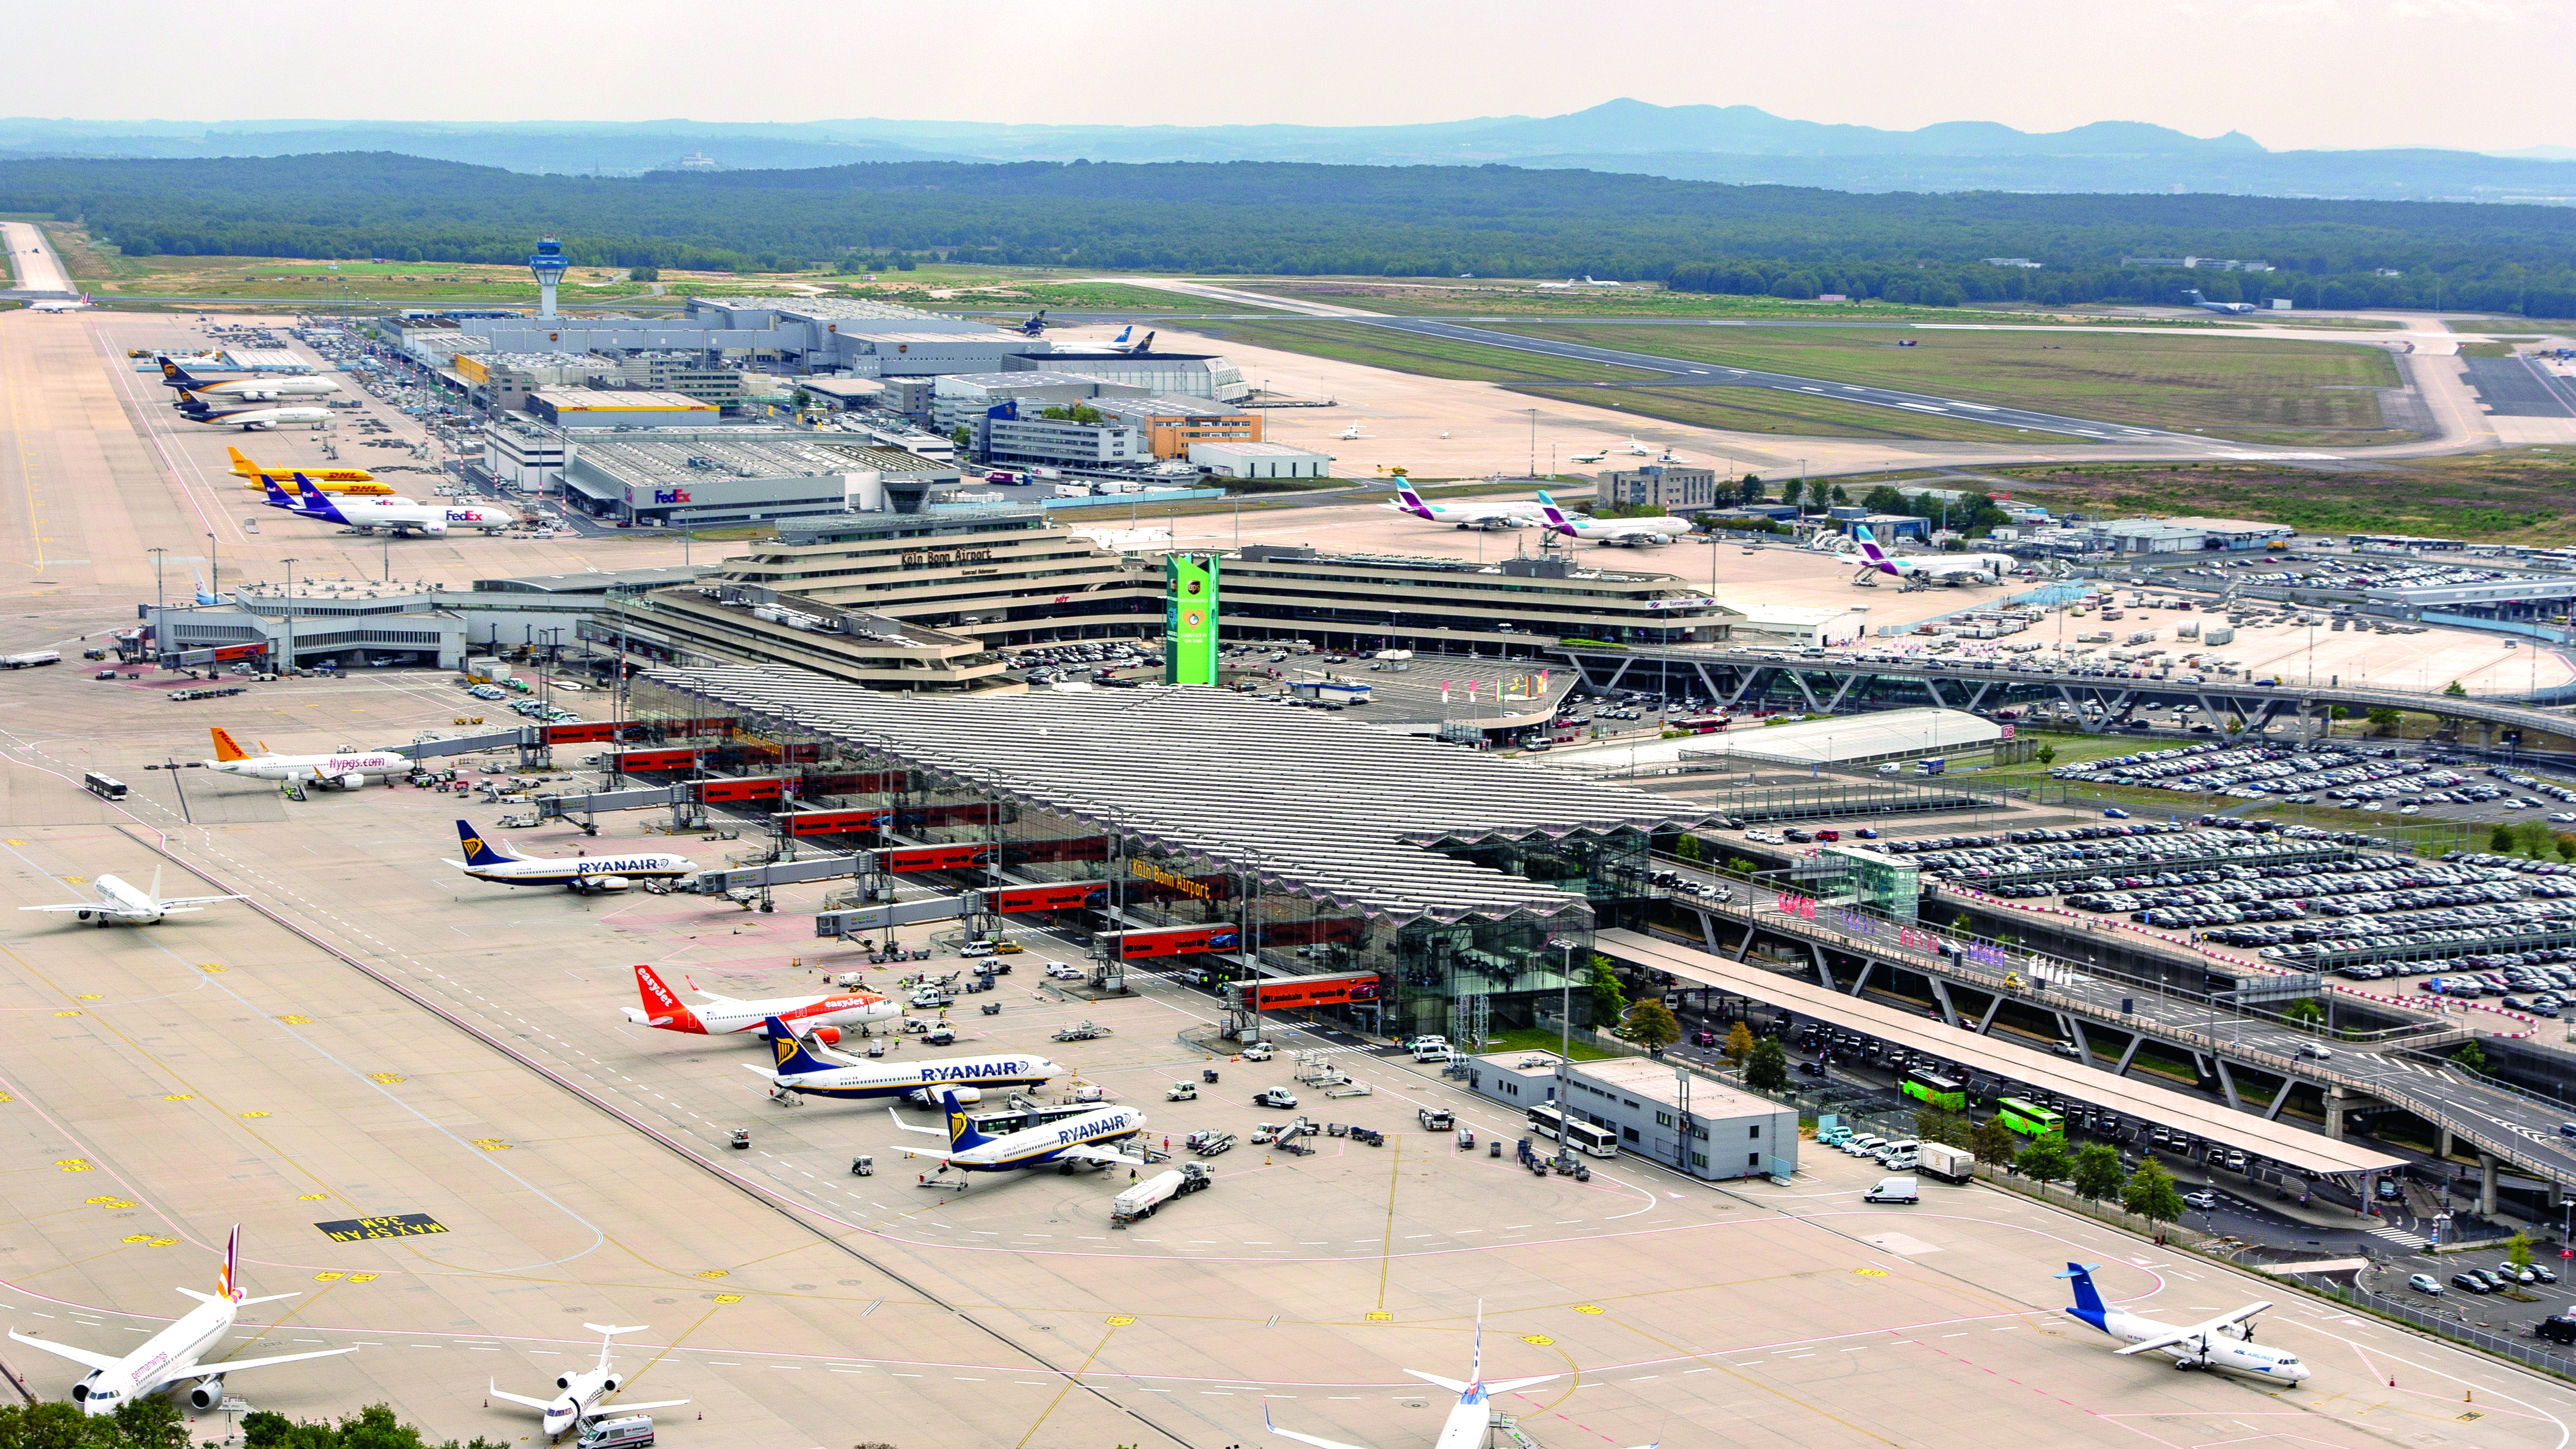 Flughafen Koln Bonn Wikipedia